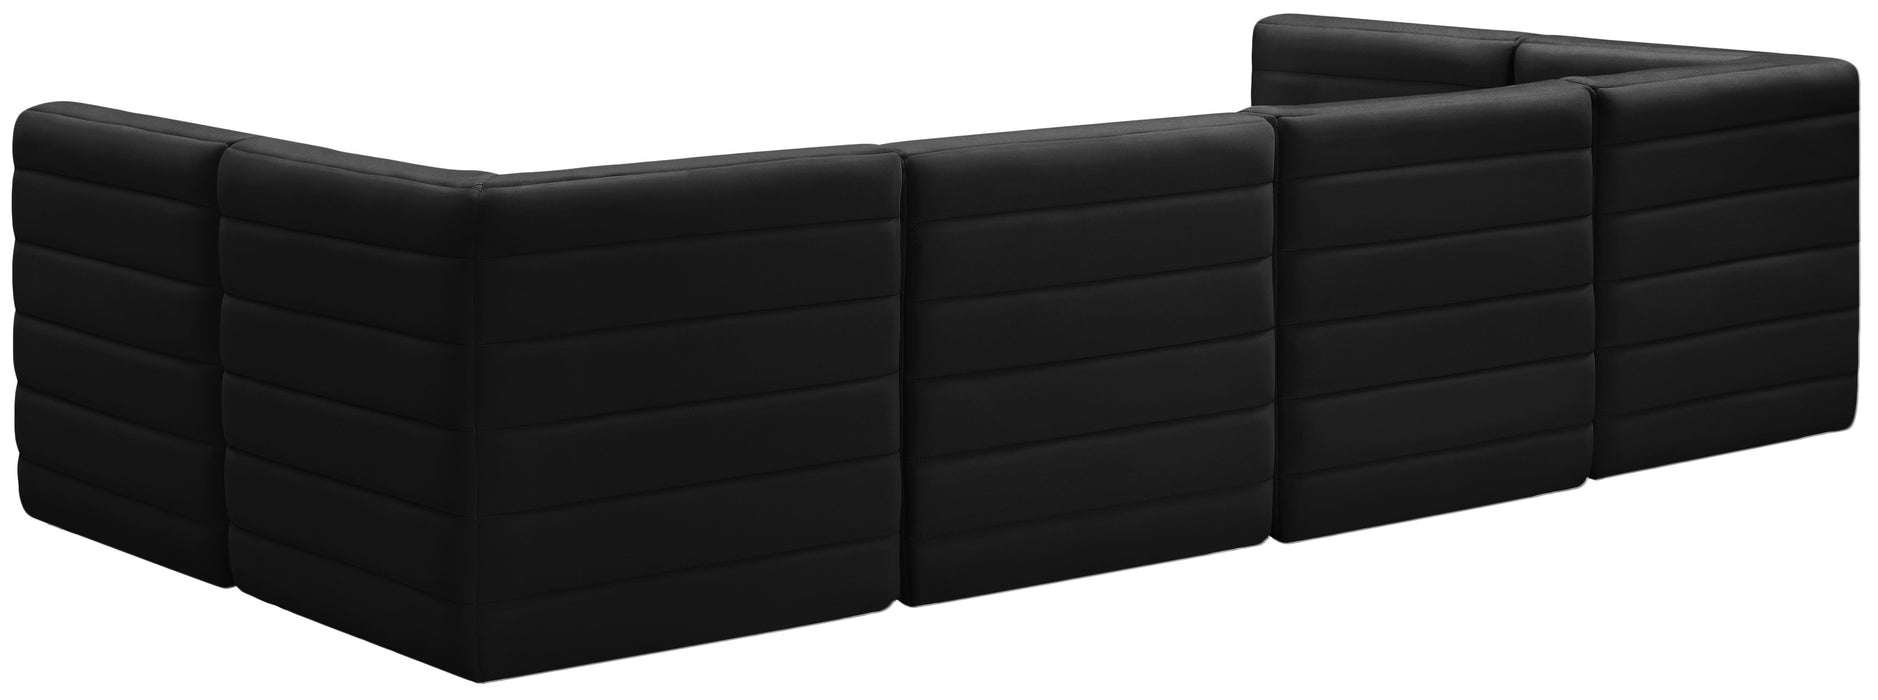 Quincy - Modular Sectional 6 Piece - Black - Fabric